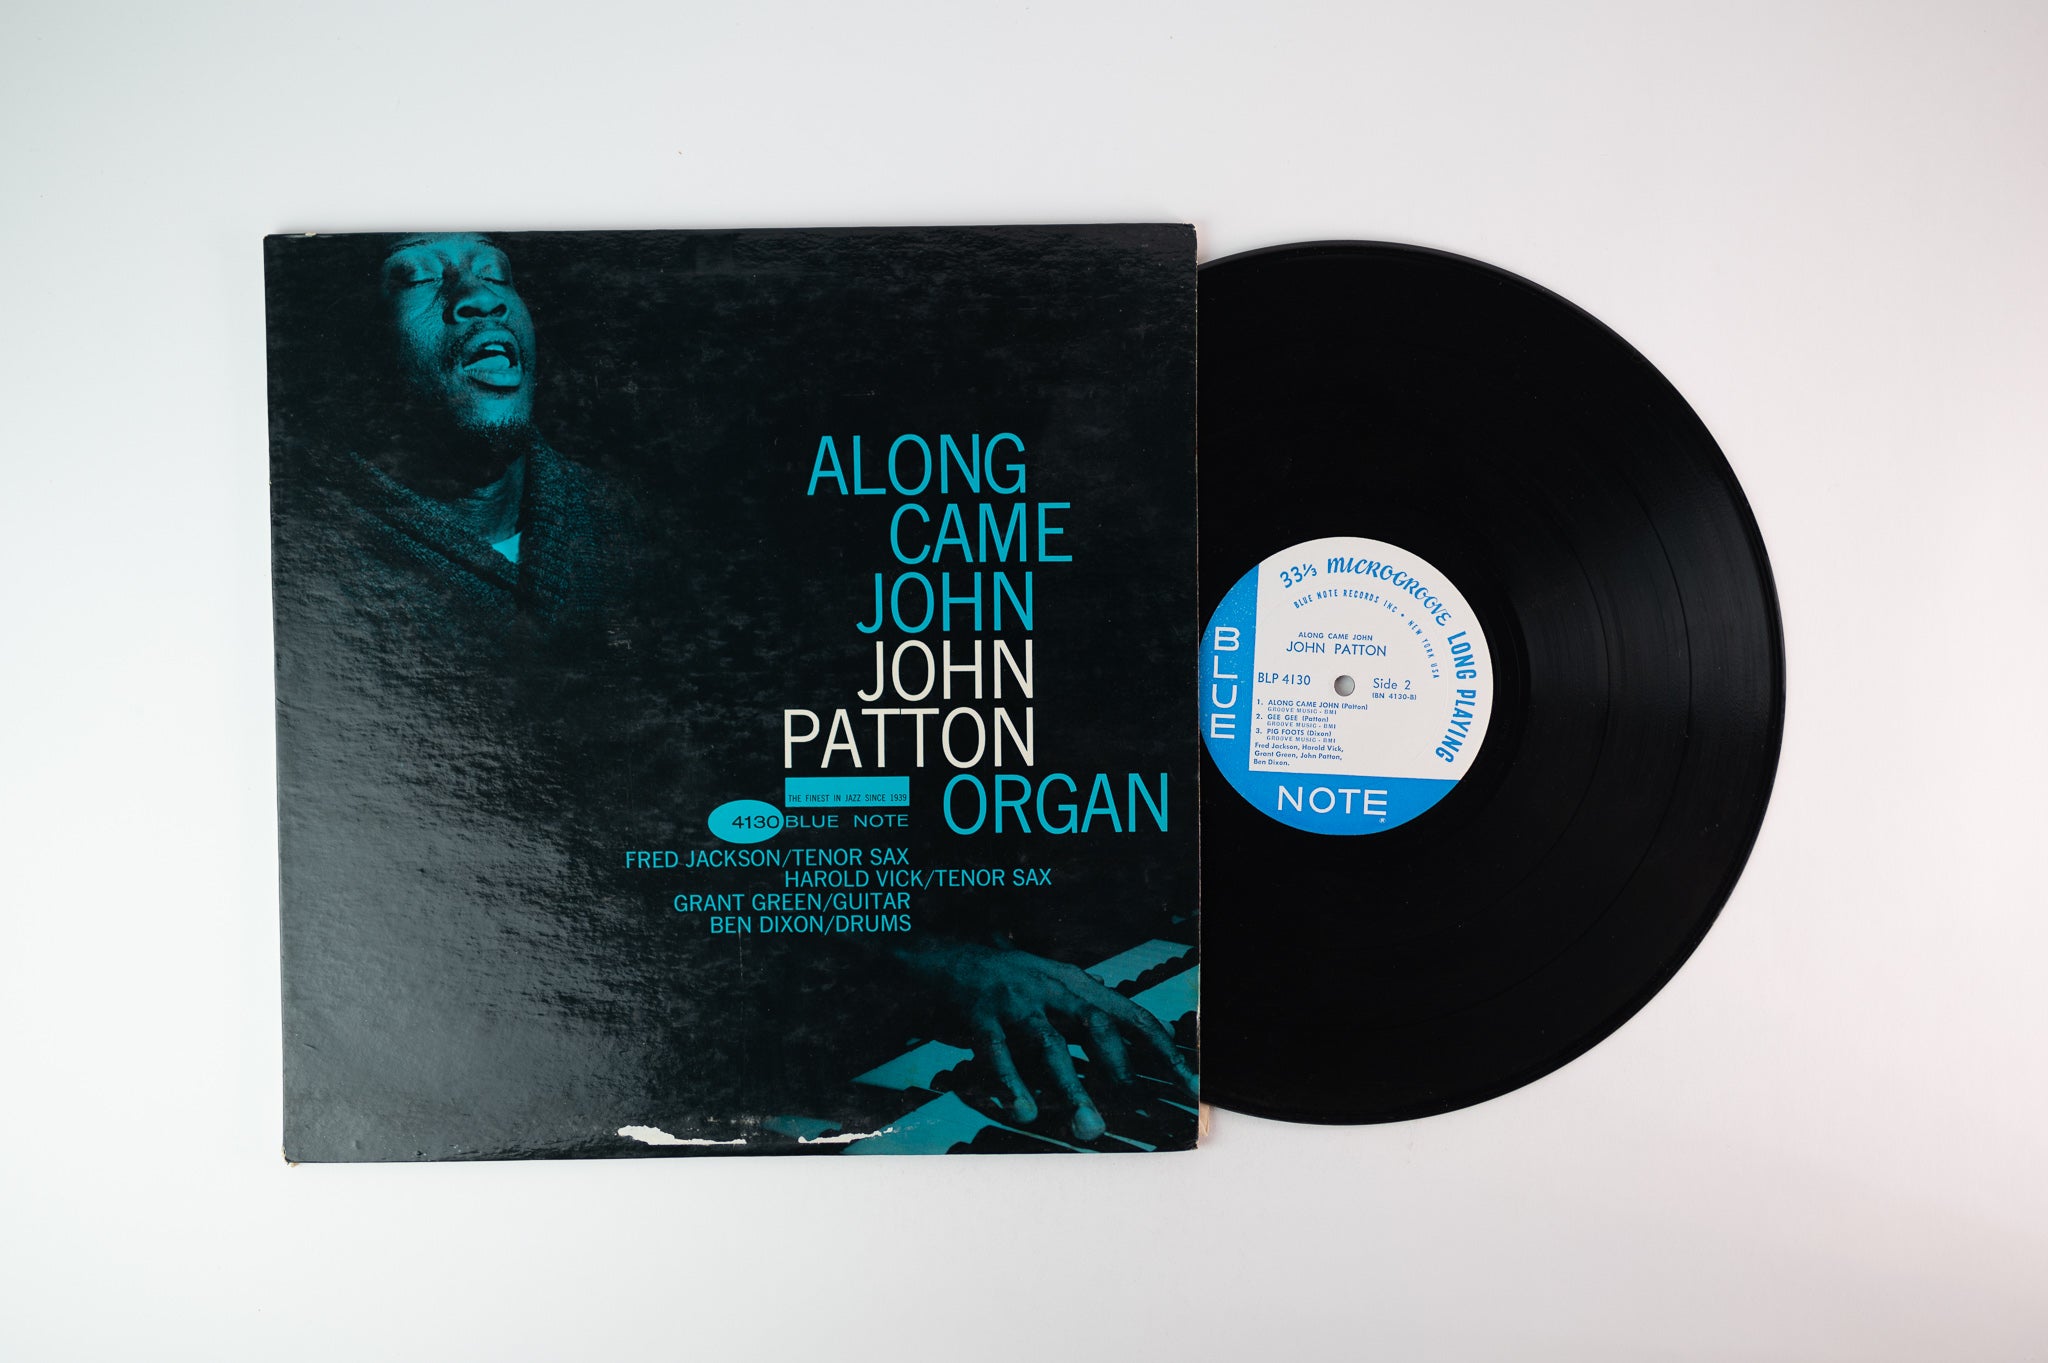 John Patton - Along Came John on Blue Note 4130 NY Mono Not Deep Groove